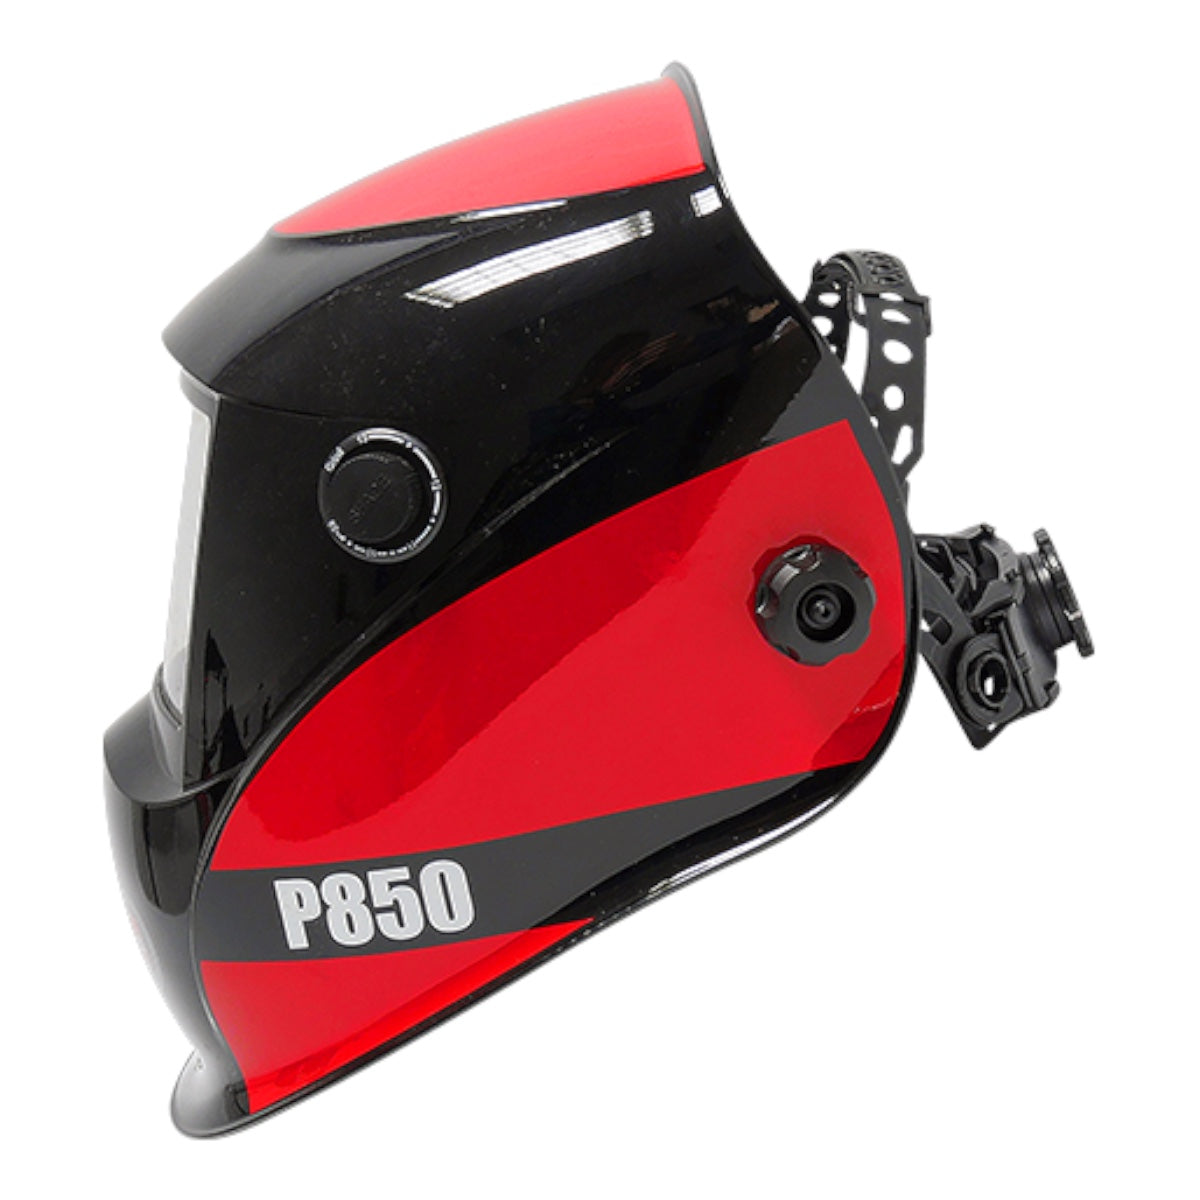 P850 automatic welding helmet